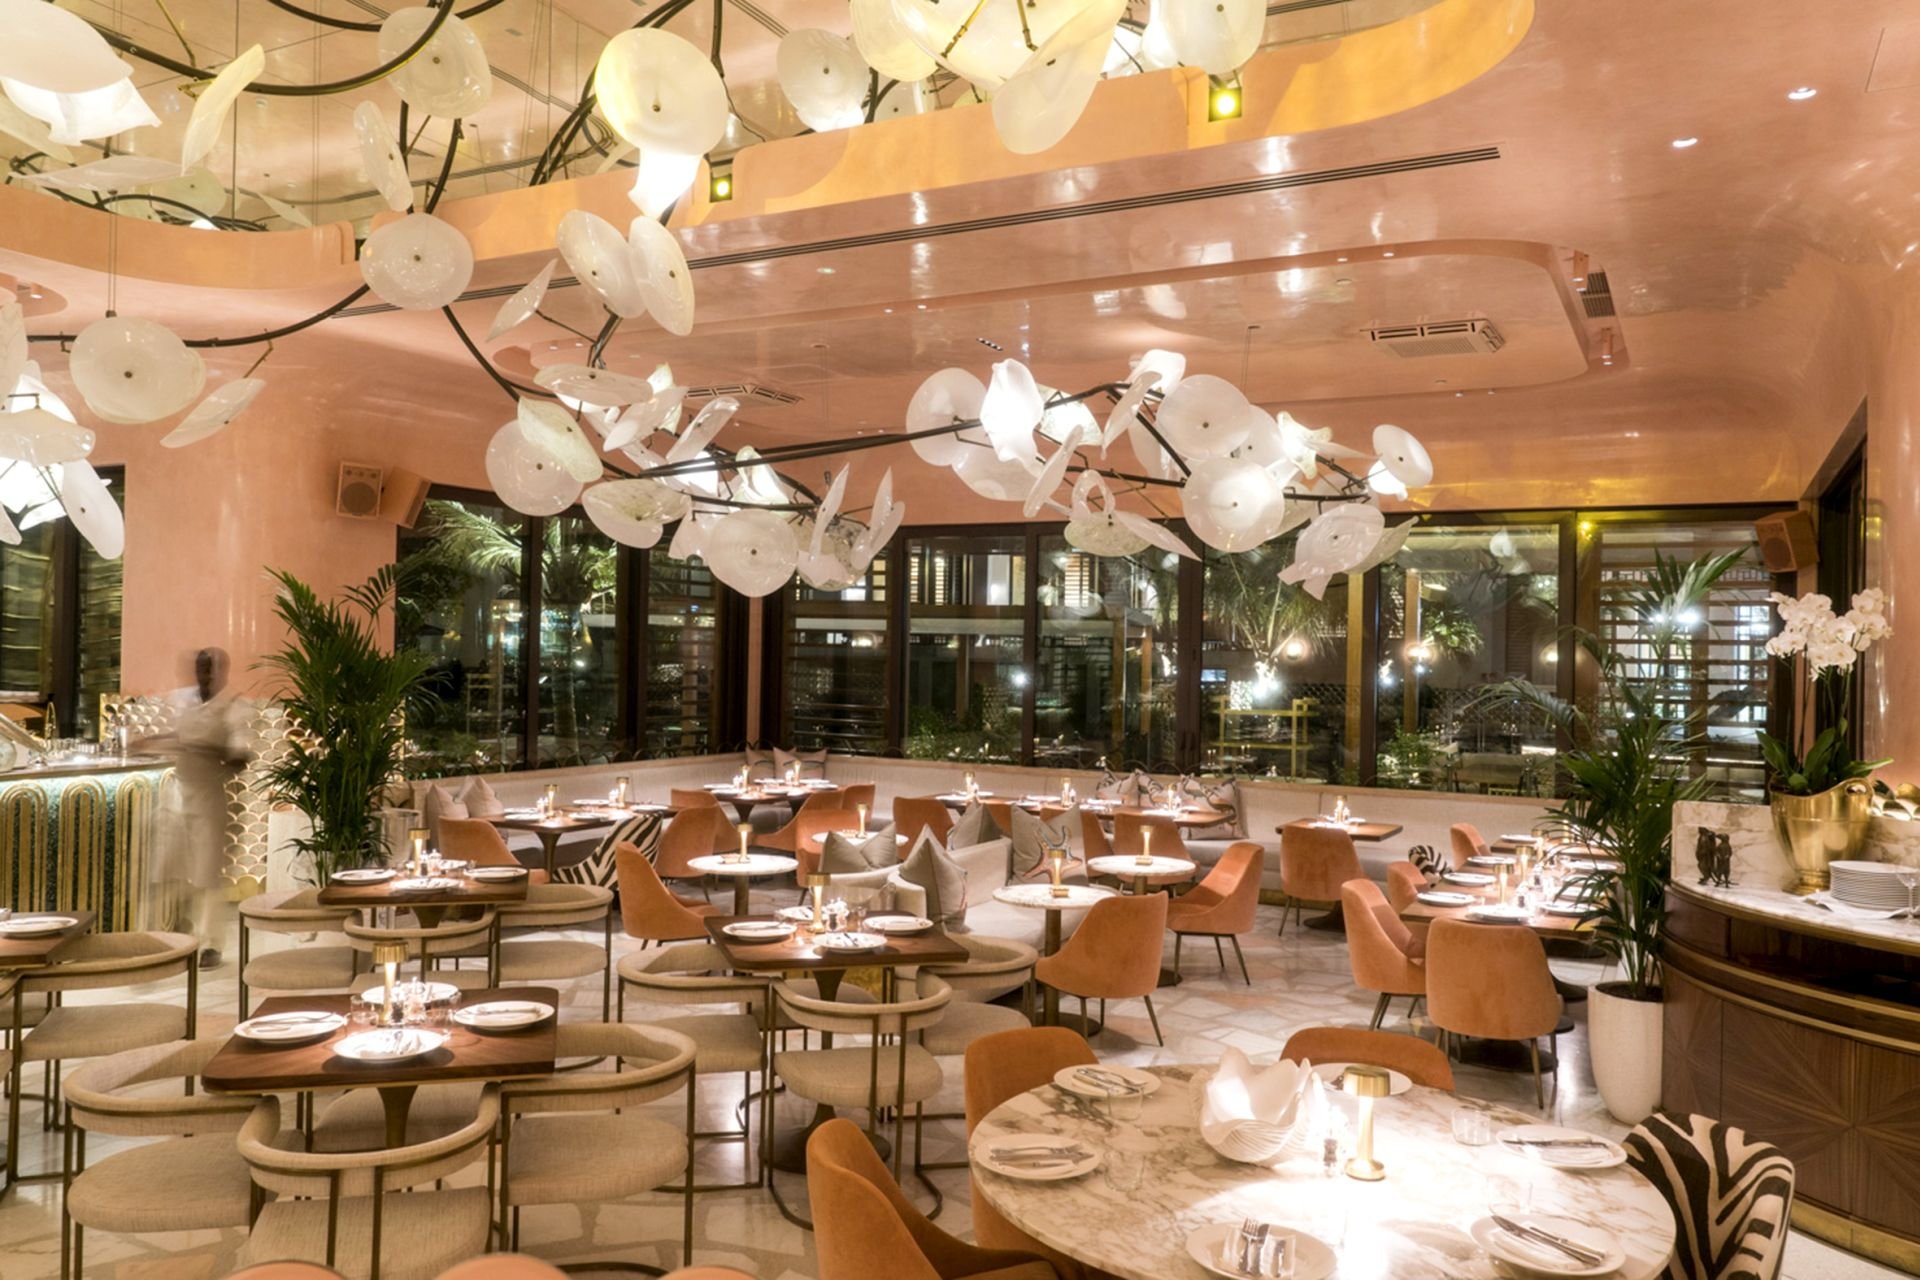 Restaurant Designs: Flamingo Room by tashas, Dubai - Love That Design